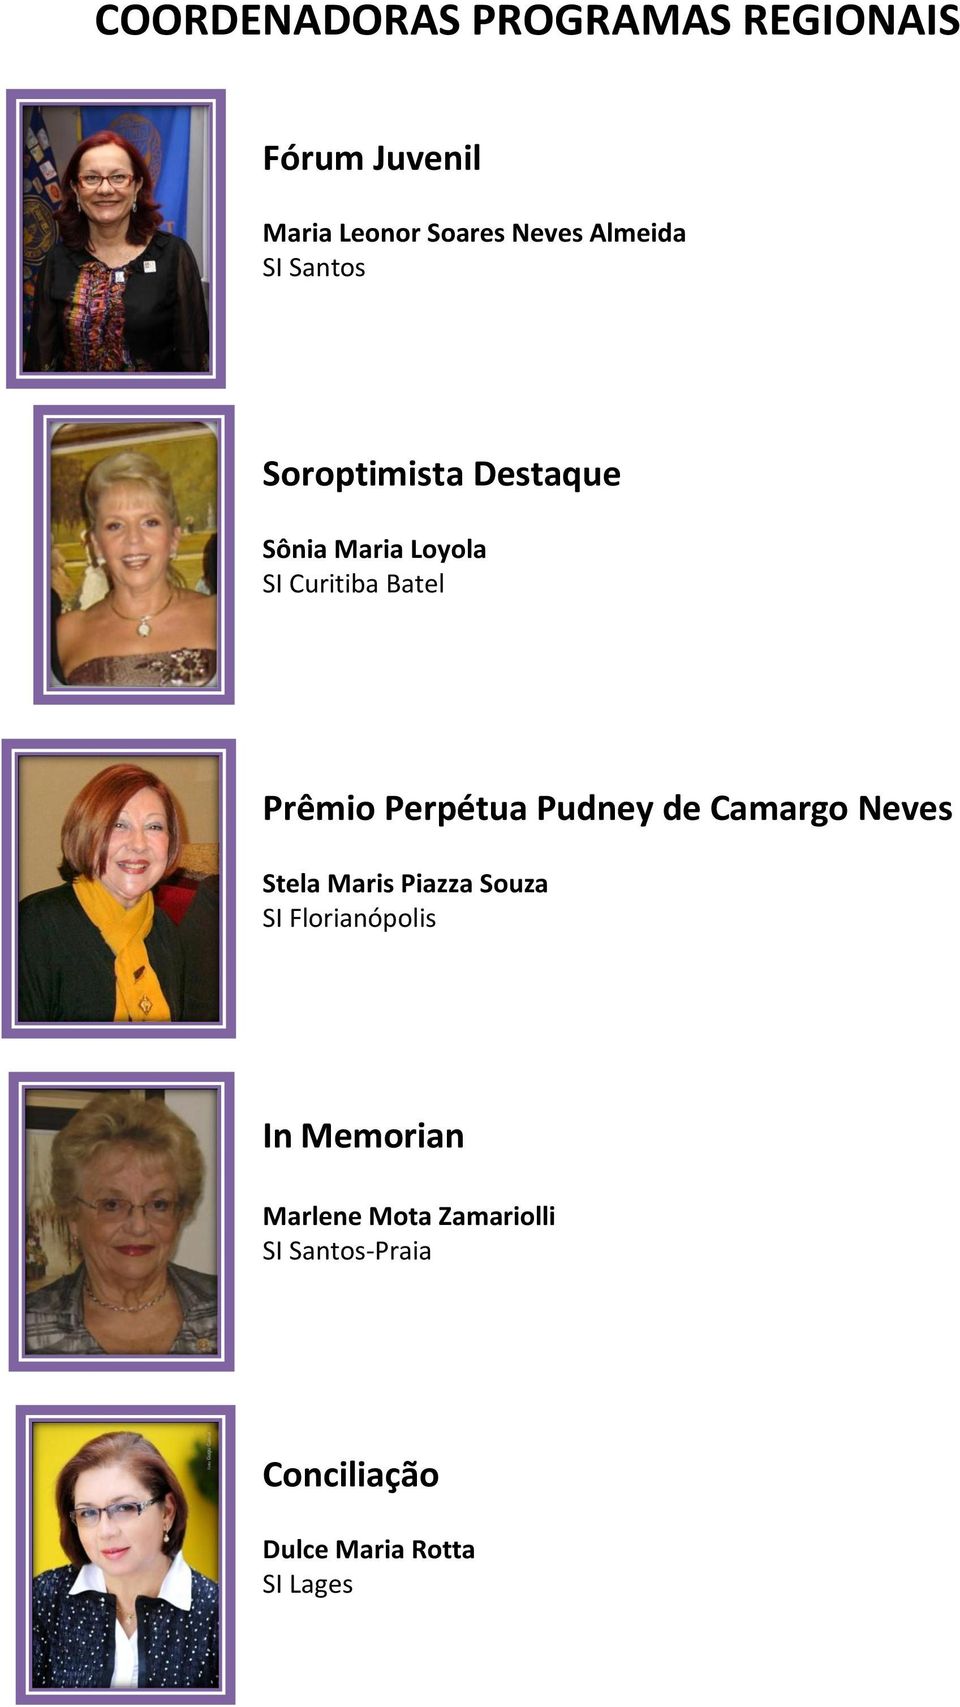 Prêmio Perpétua Pudney de Camargo Neves Stela Maris Piazza Souza SI